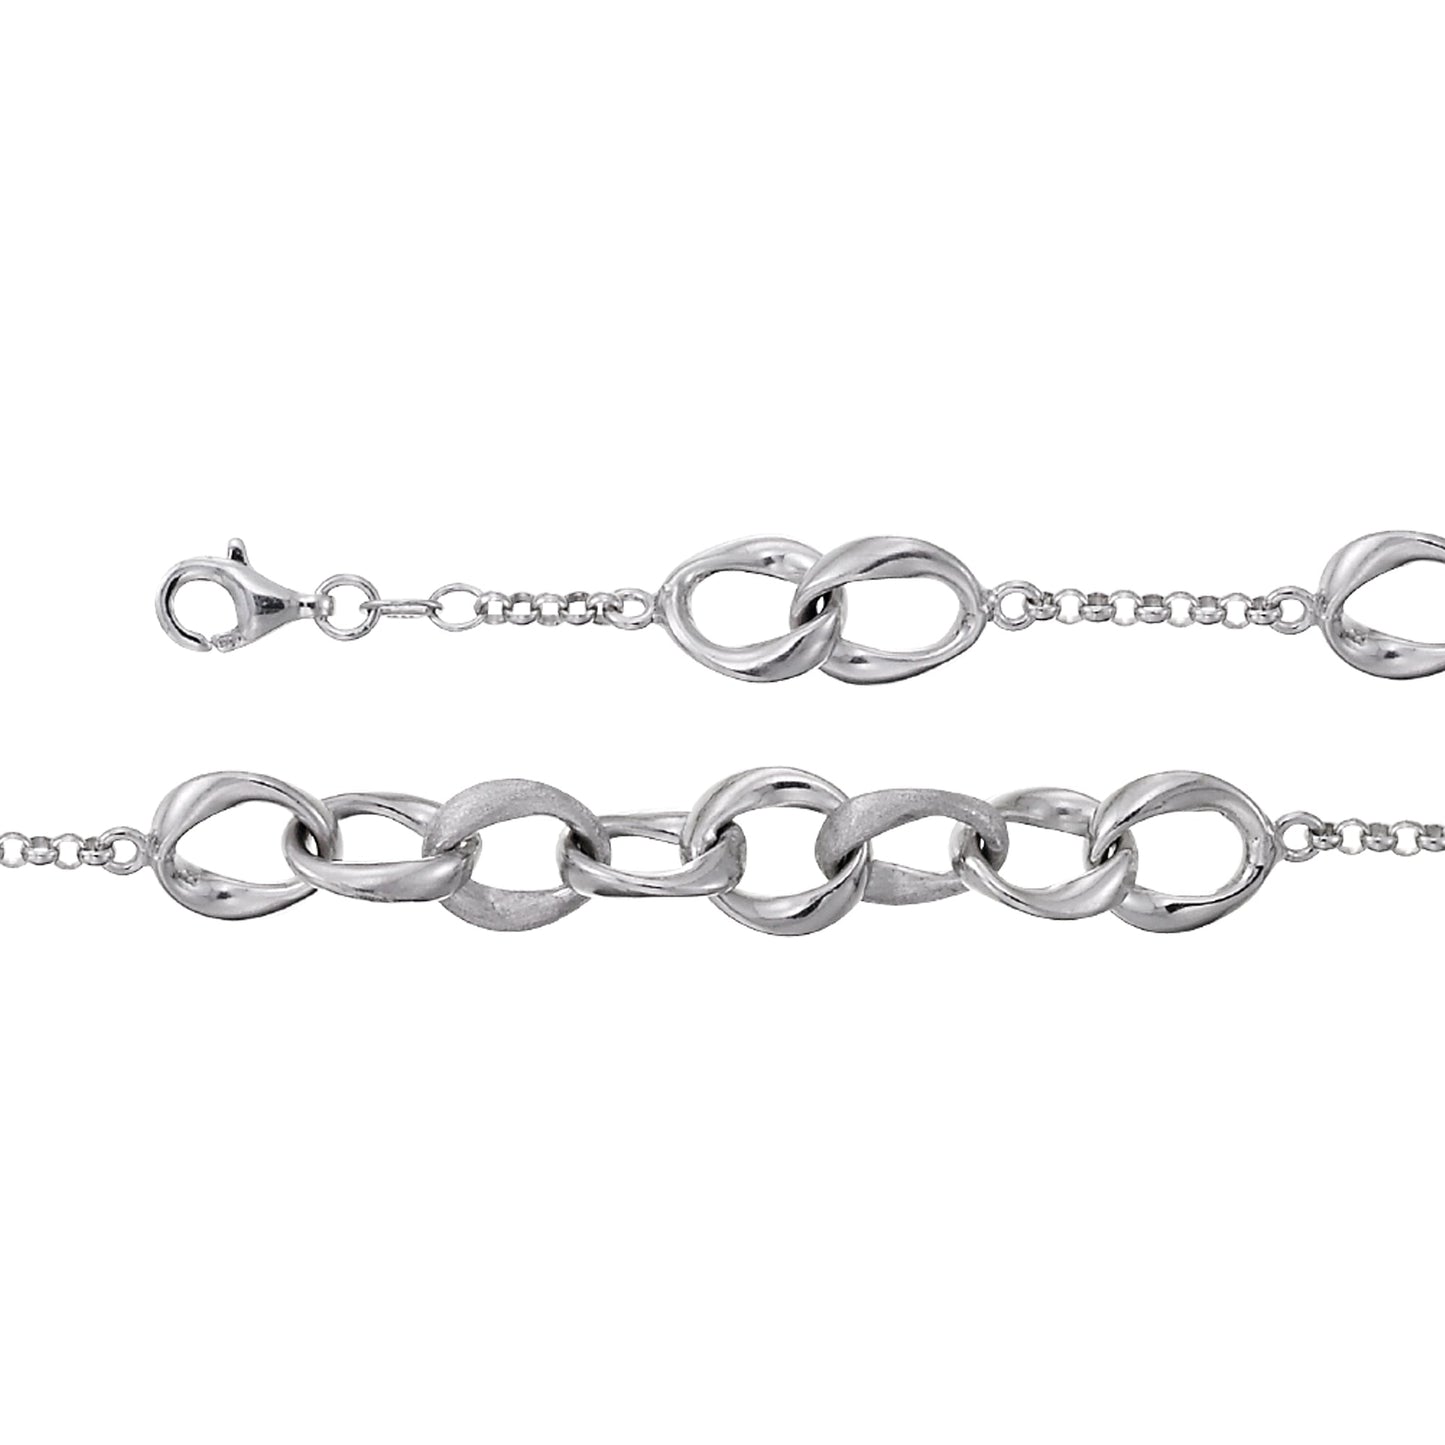 Franco Stellari Italian Sterling Silver Satin/Polished Link Necklace, 17"